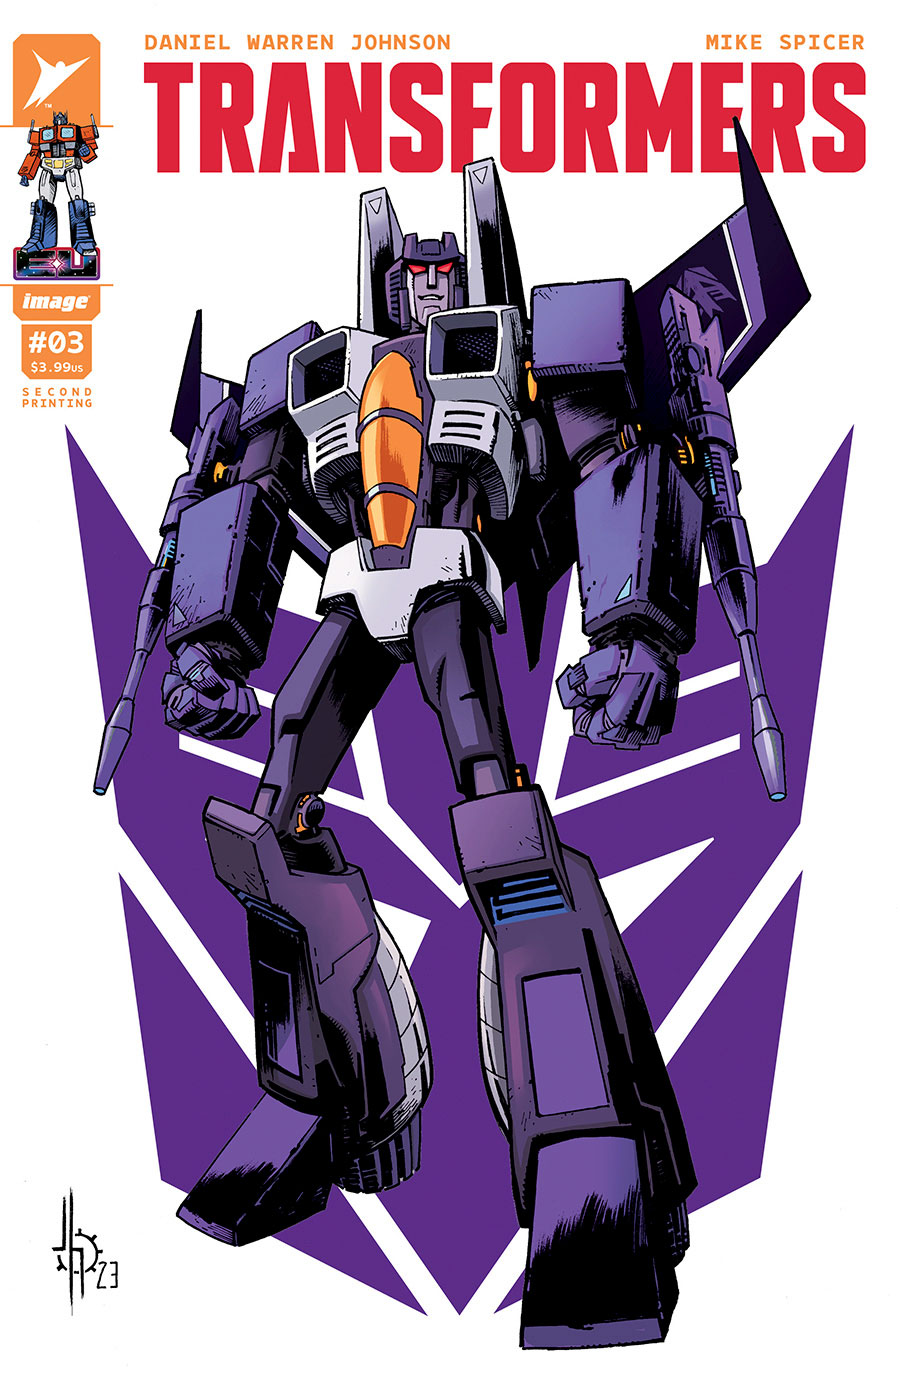 Transformers Vol 5 #3 Cover F 2nd Ptg A Jason Howard Skywarp Variant Cover (Limit 1 Per Customer)